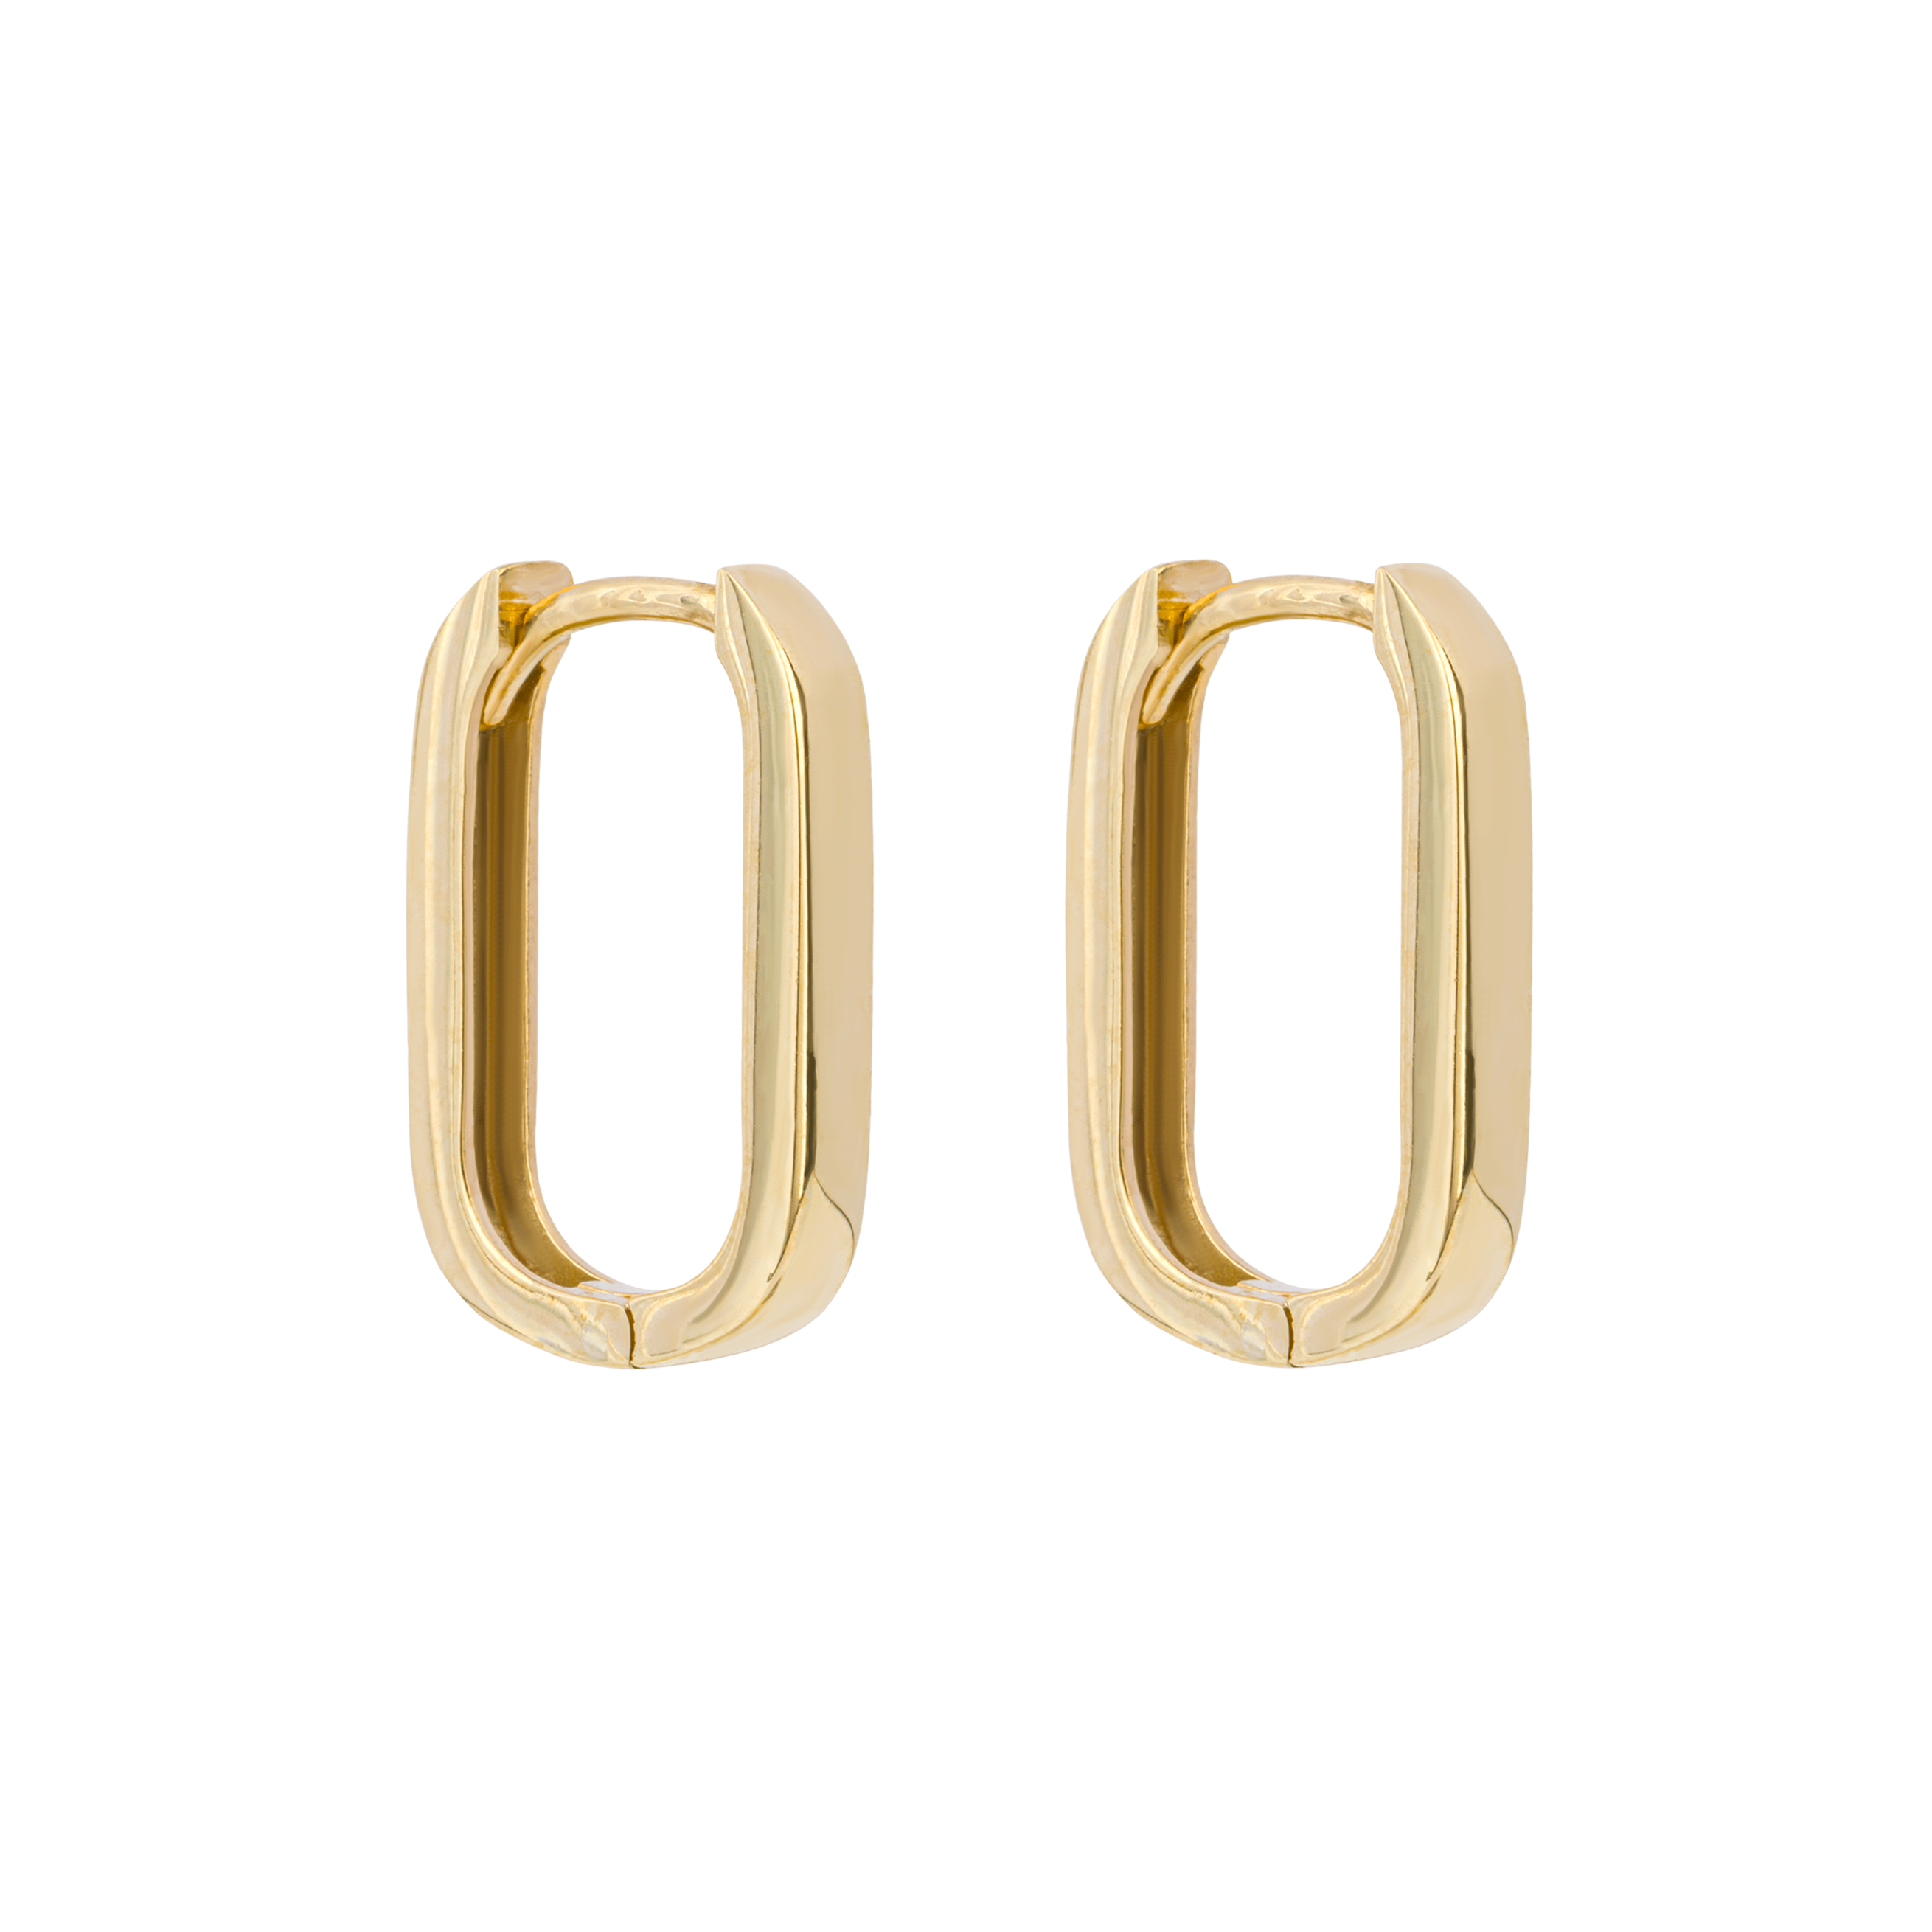 U Shape Hoop Earrings in 9ct Yellow Gold - Robert Anthony Jewellers, Edinburgh